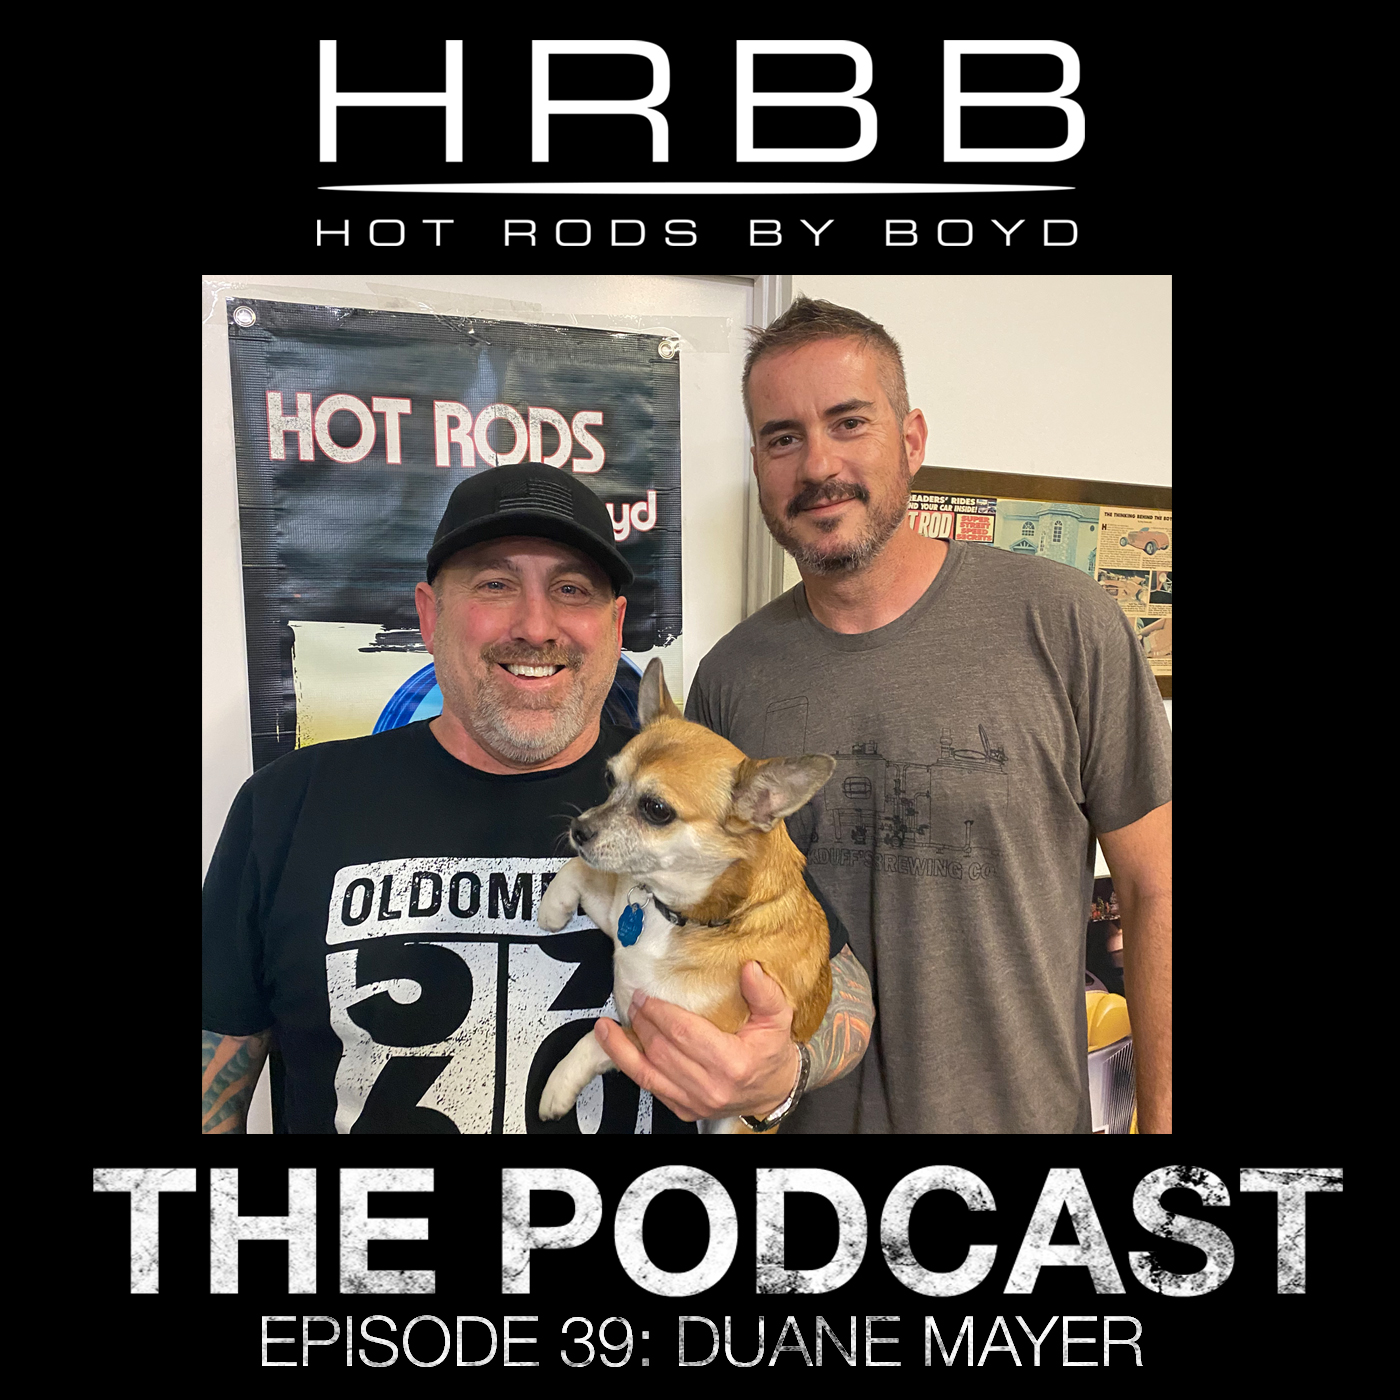 HRBB Podcast Ep 39 - Duane Mayer